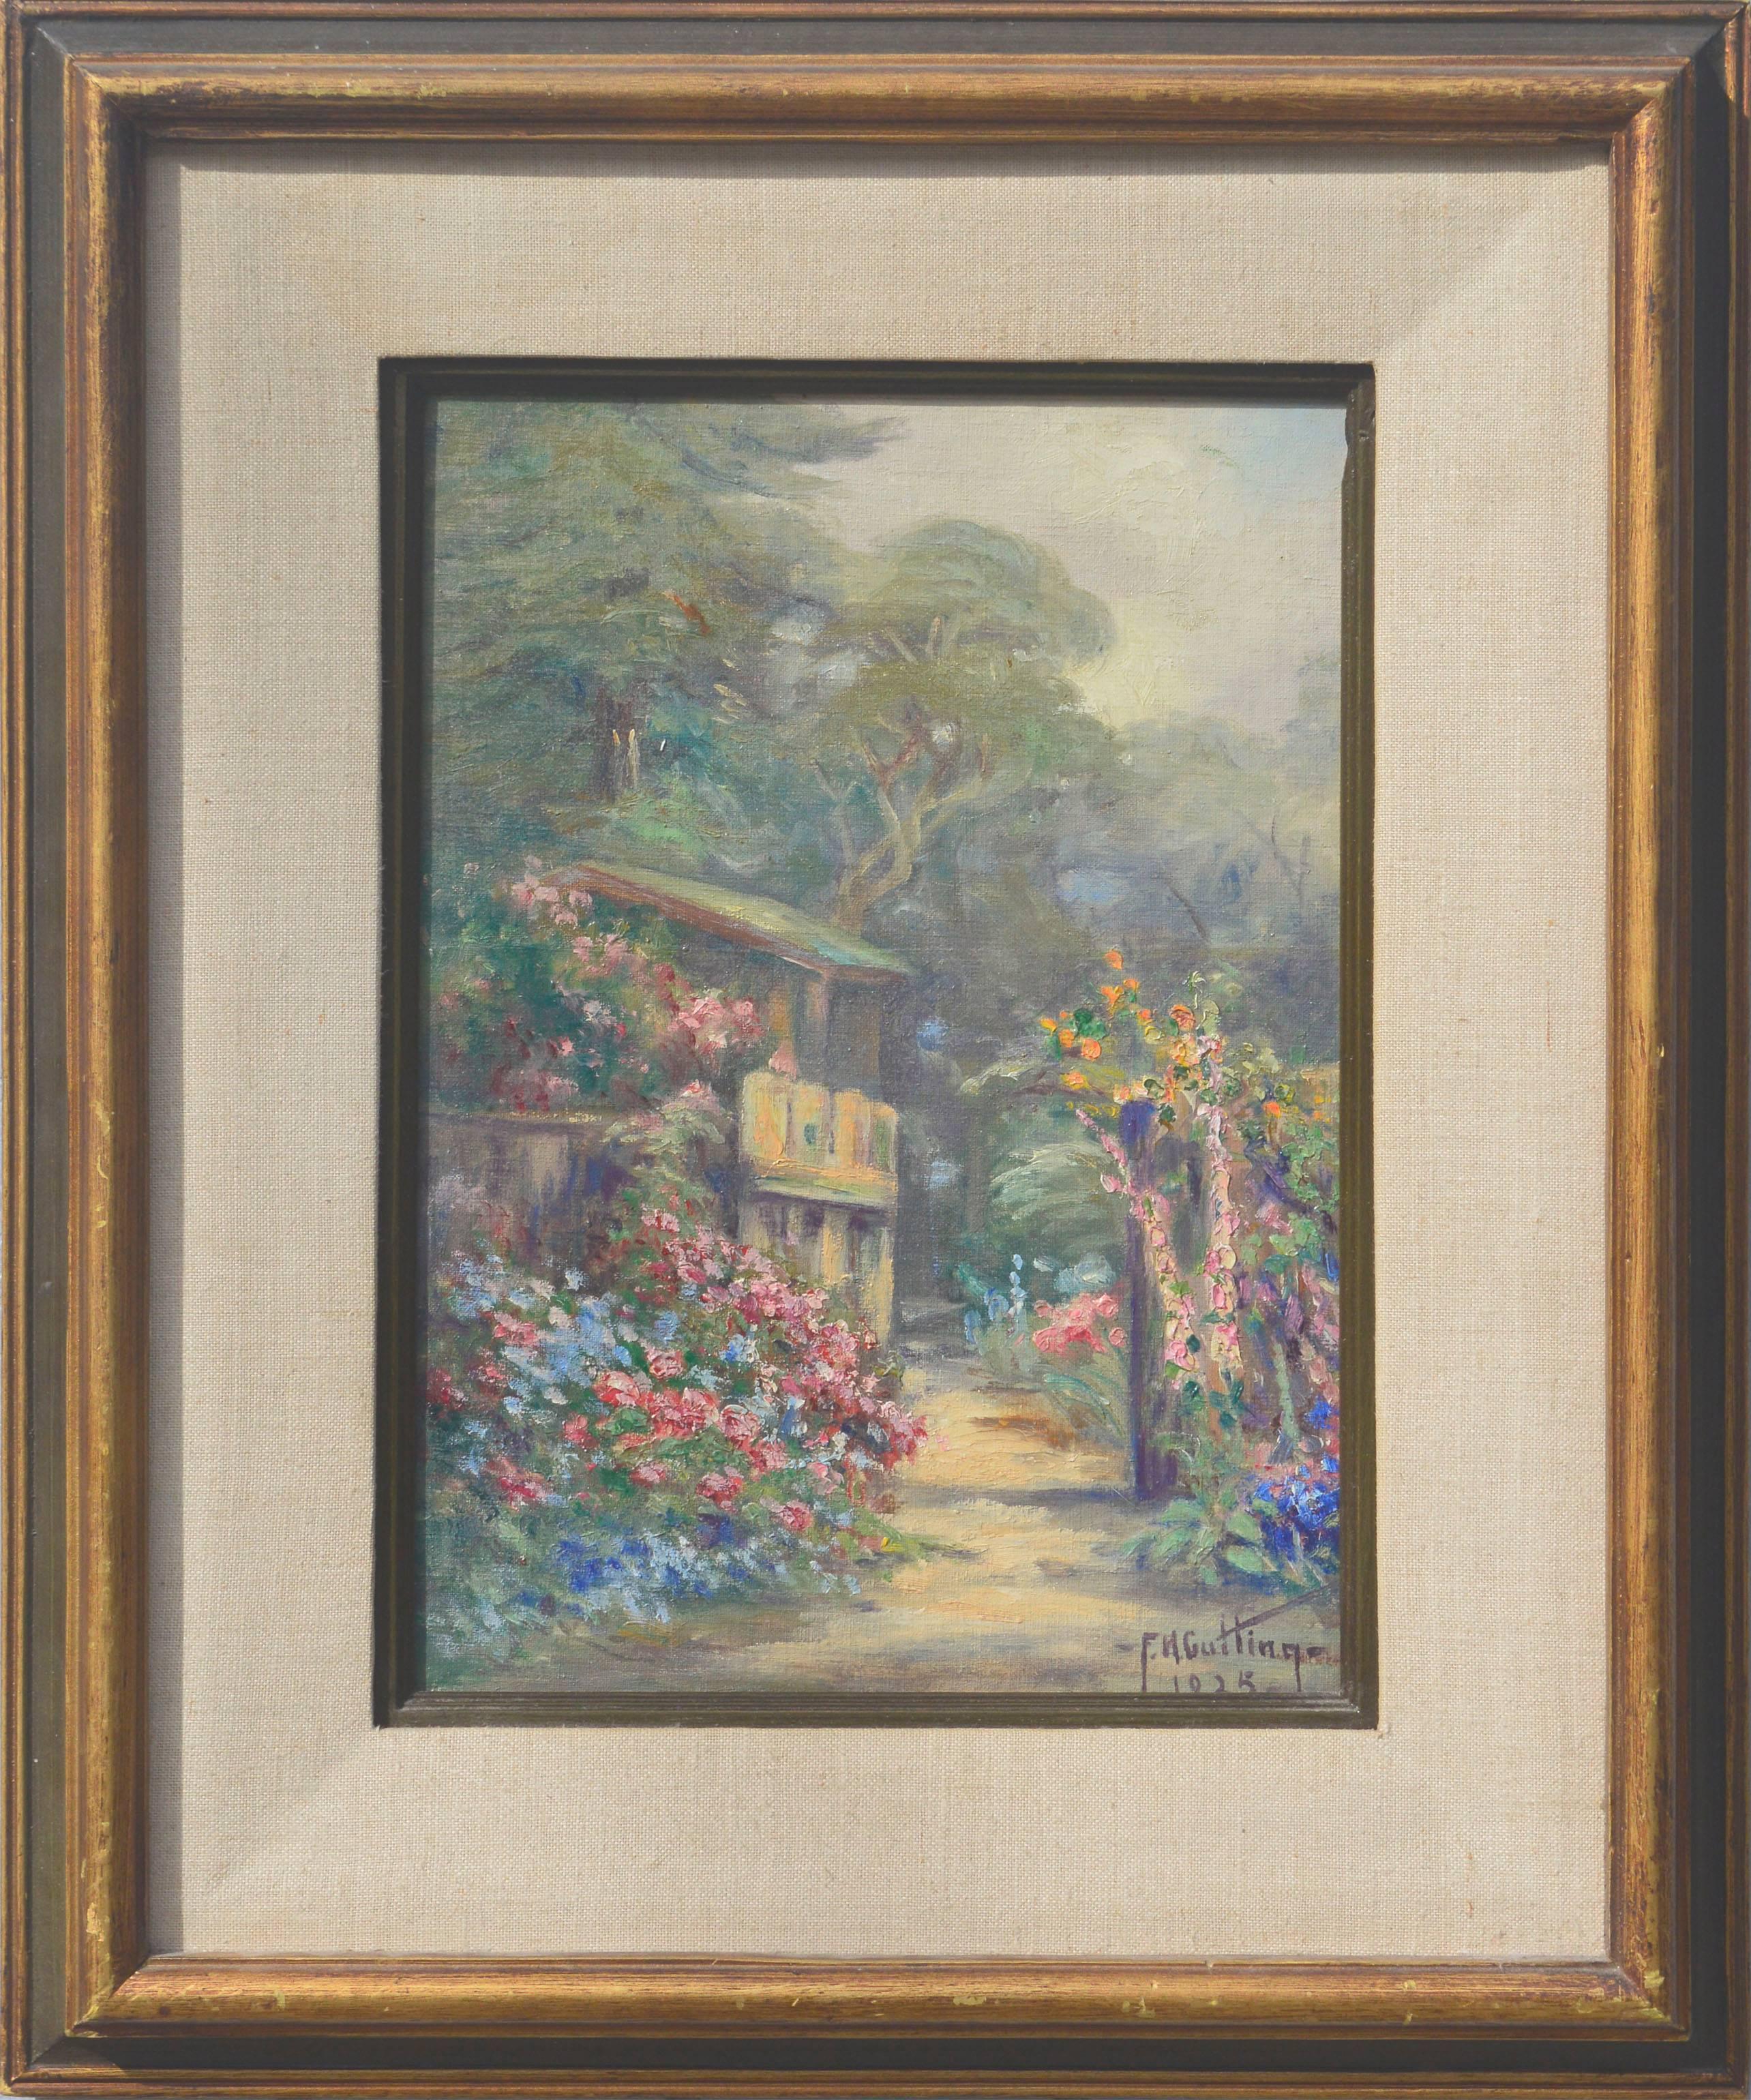 Frank Cutting Landscape Painting - Pacific Grove Garden Gate, 1925 - Floral Landscape 